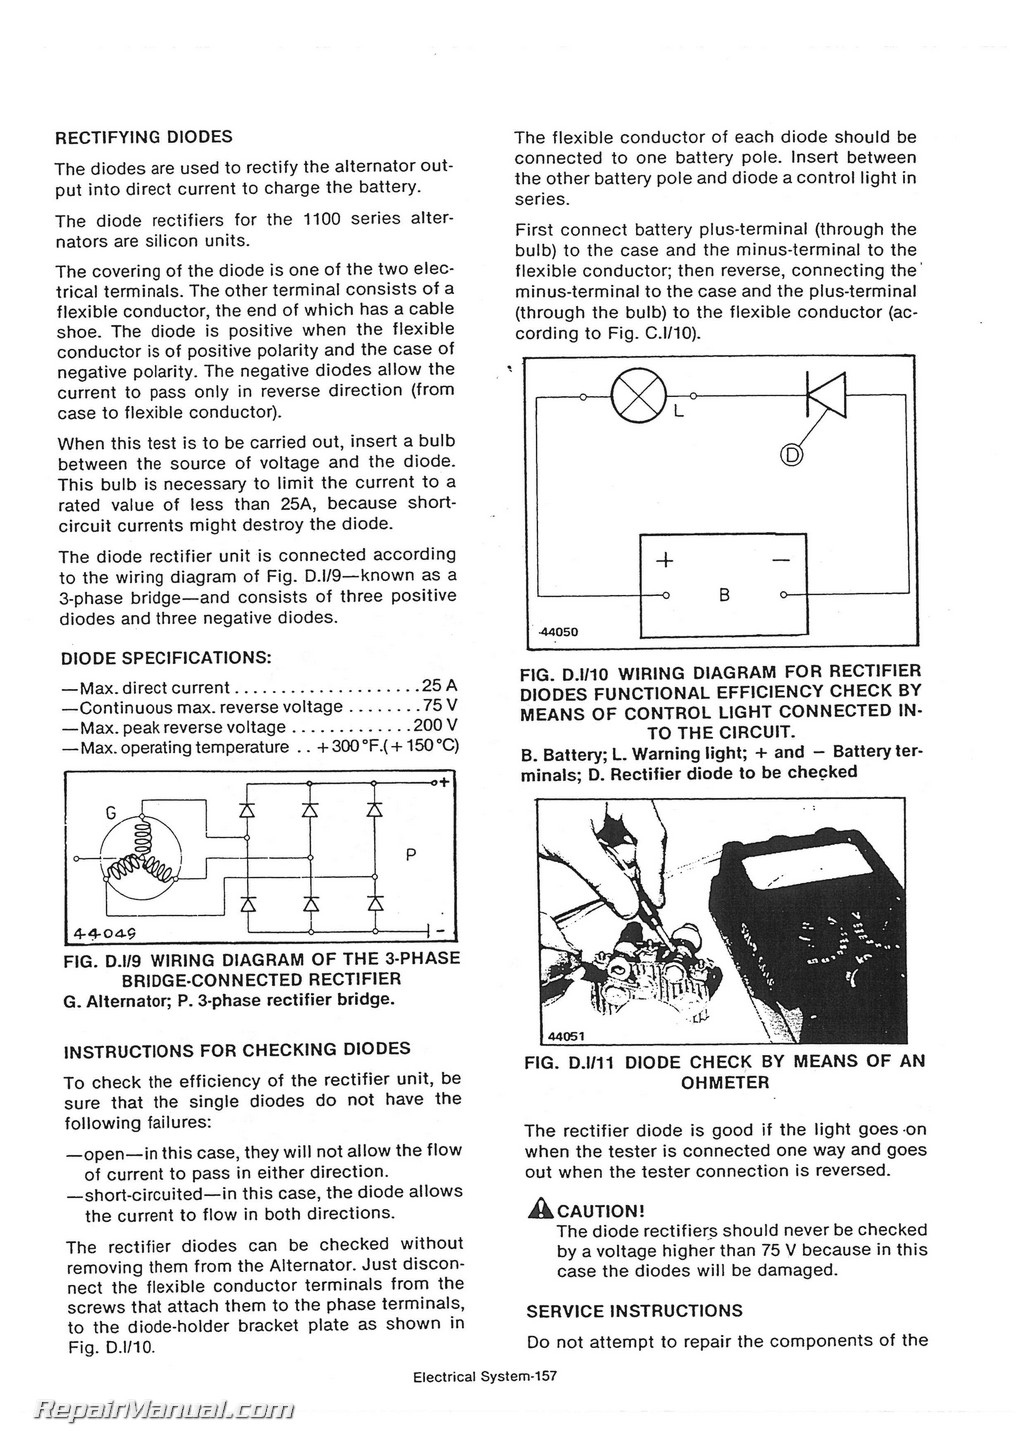 Long 260 310 2 Cylinder Tractor Service Manual – Repair Manuals ...